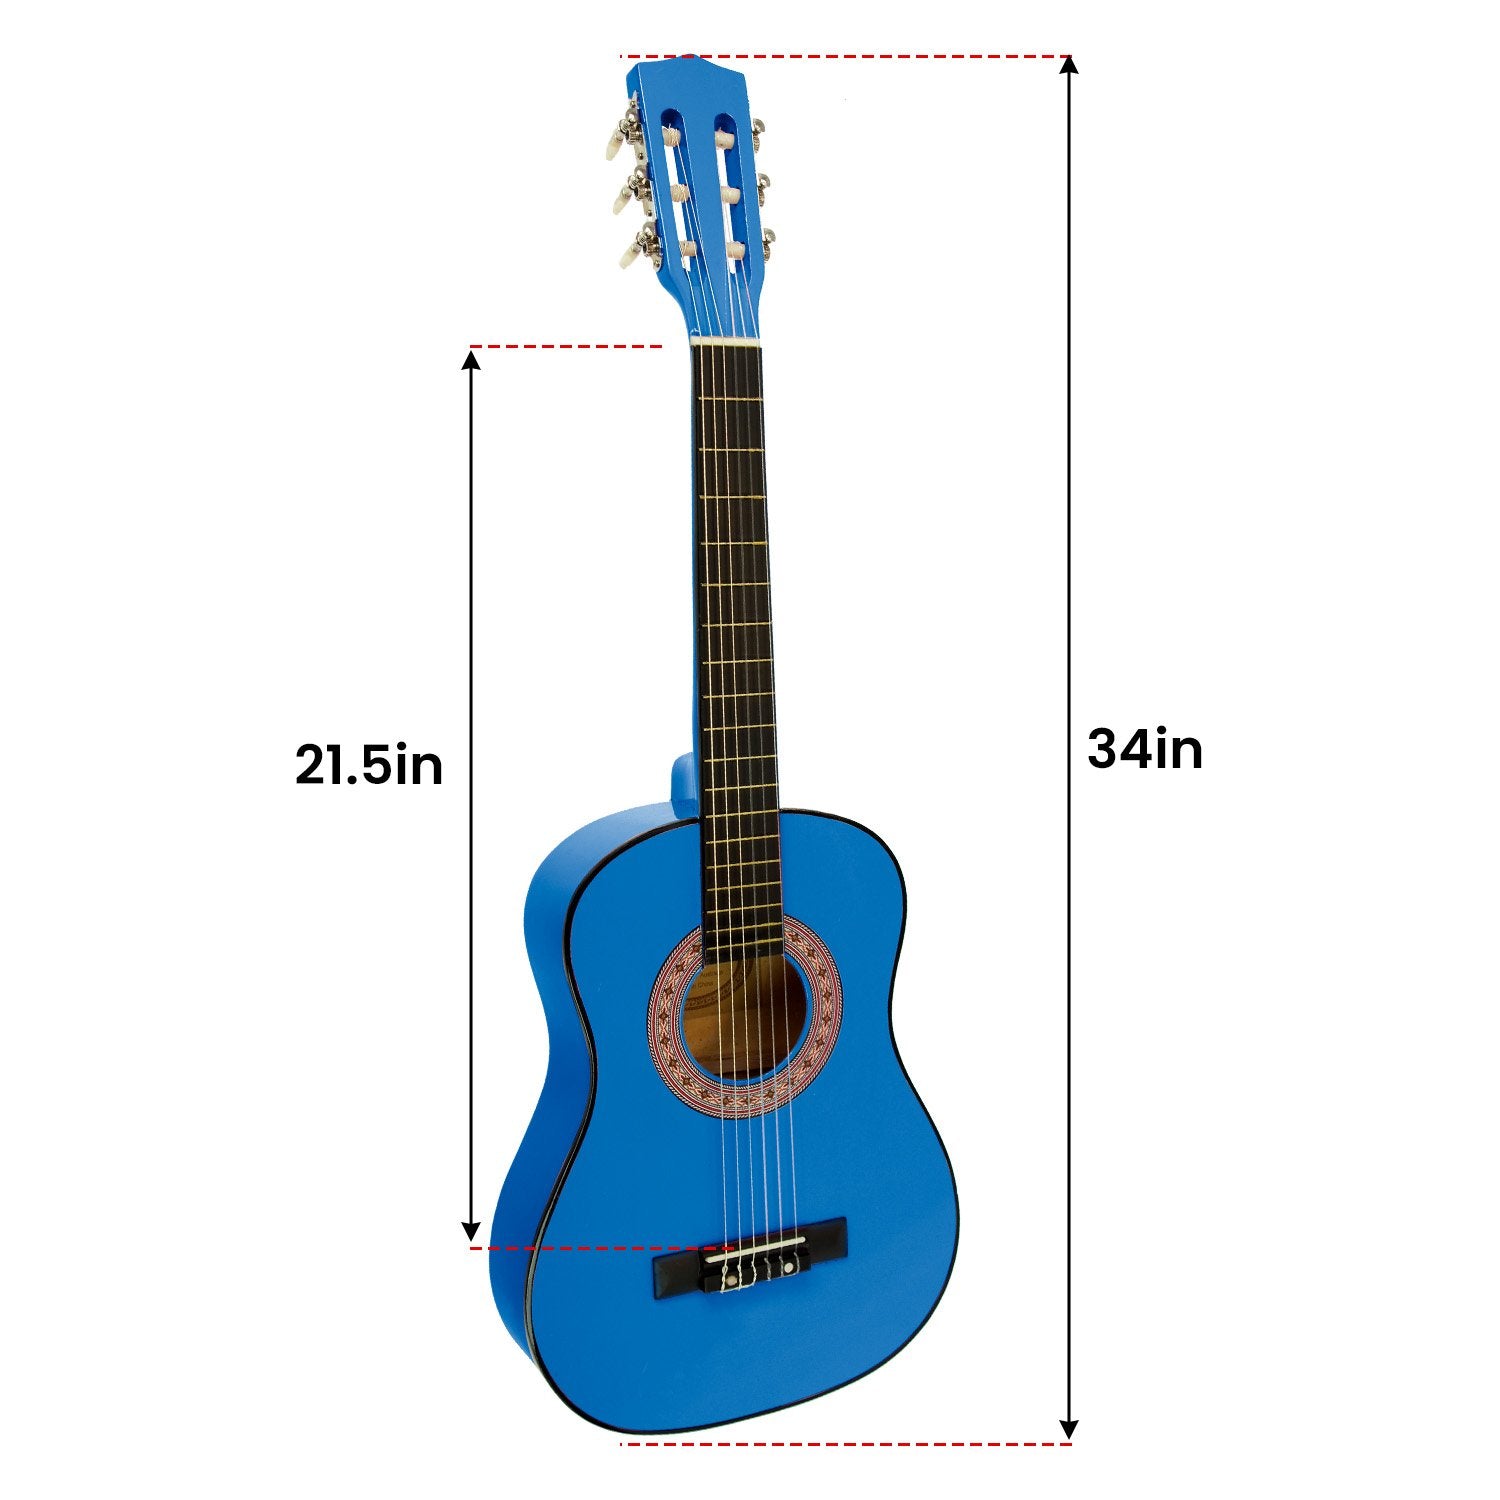 Karrera 34in Acoustic Children no cut Guitar - Blue - SILBERSHELL